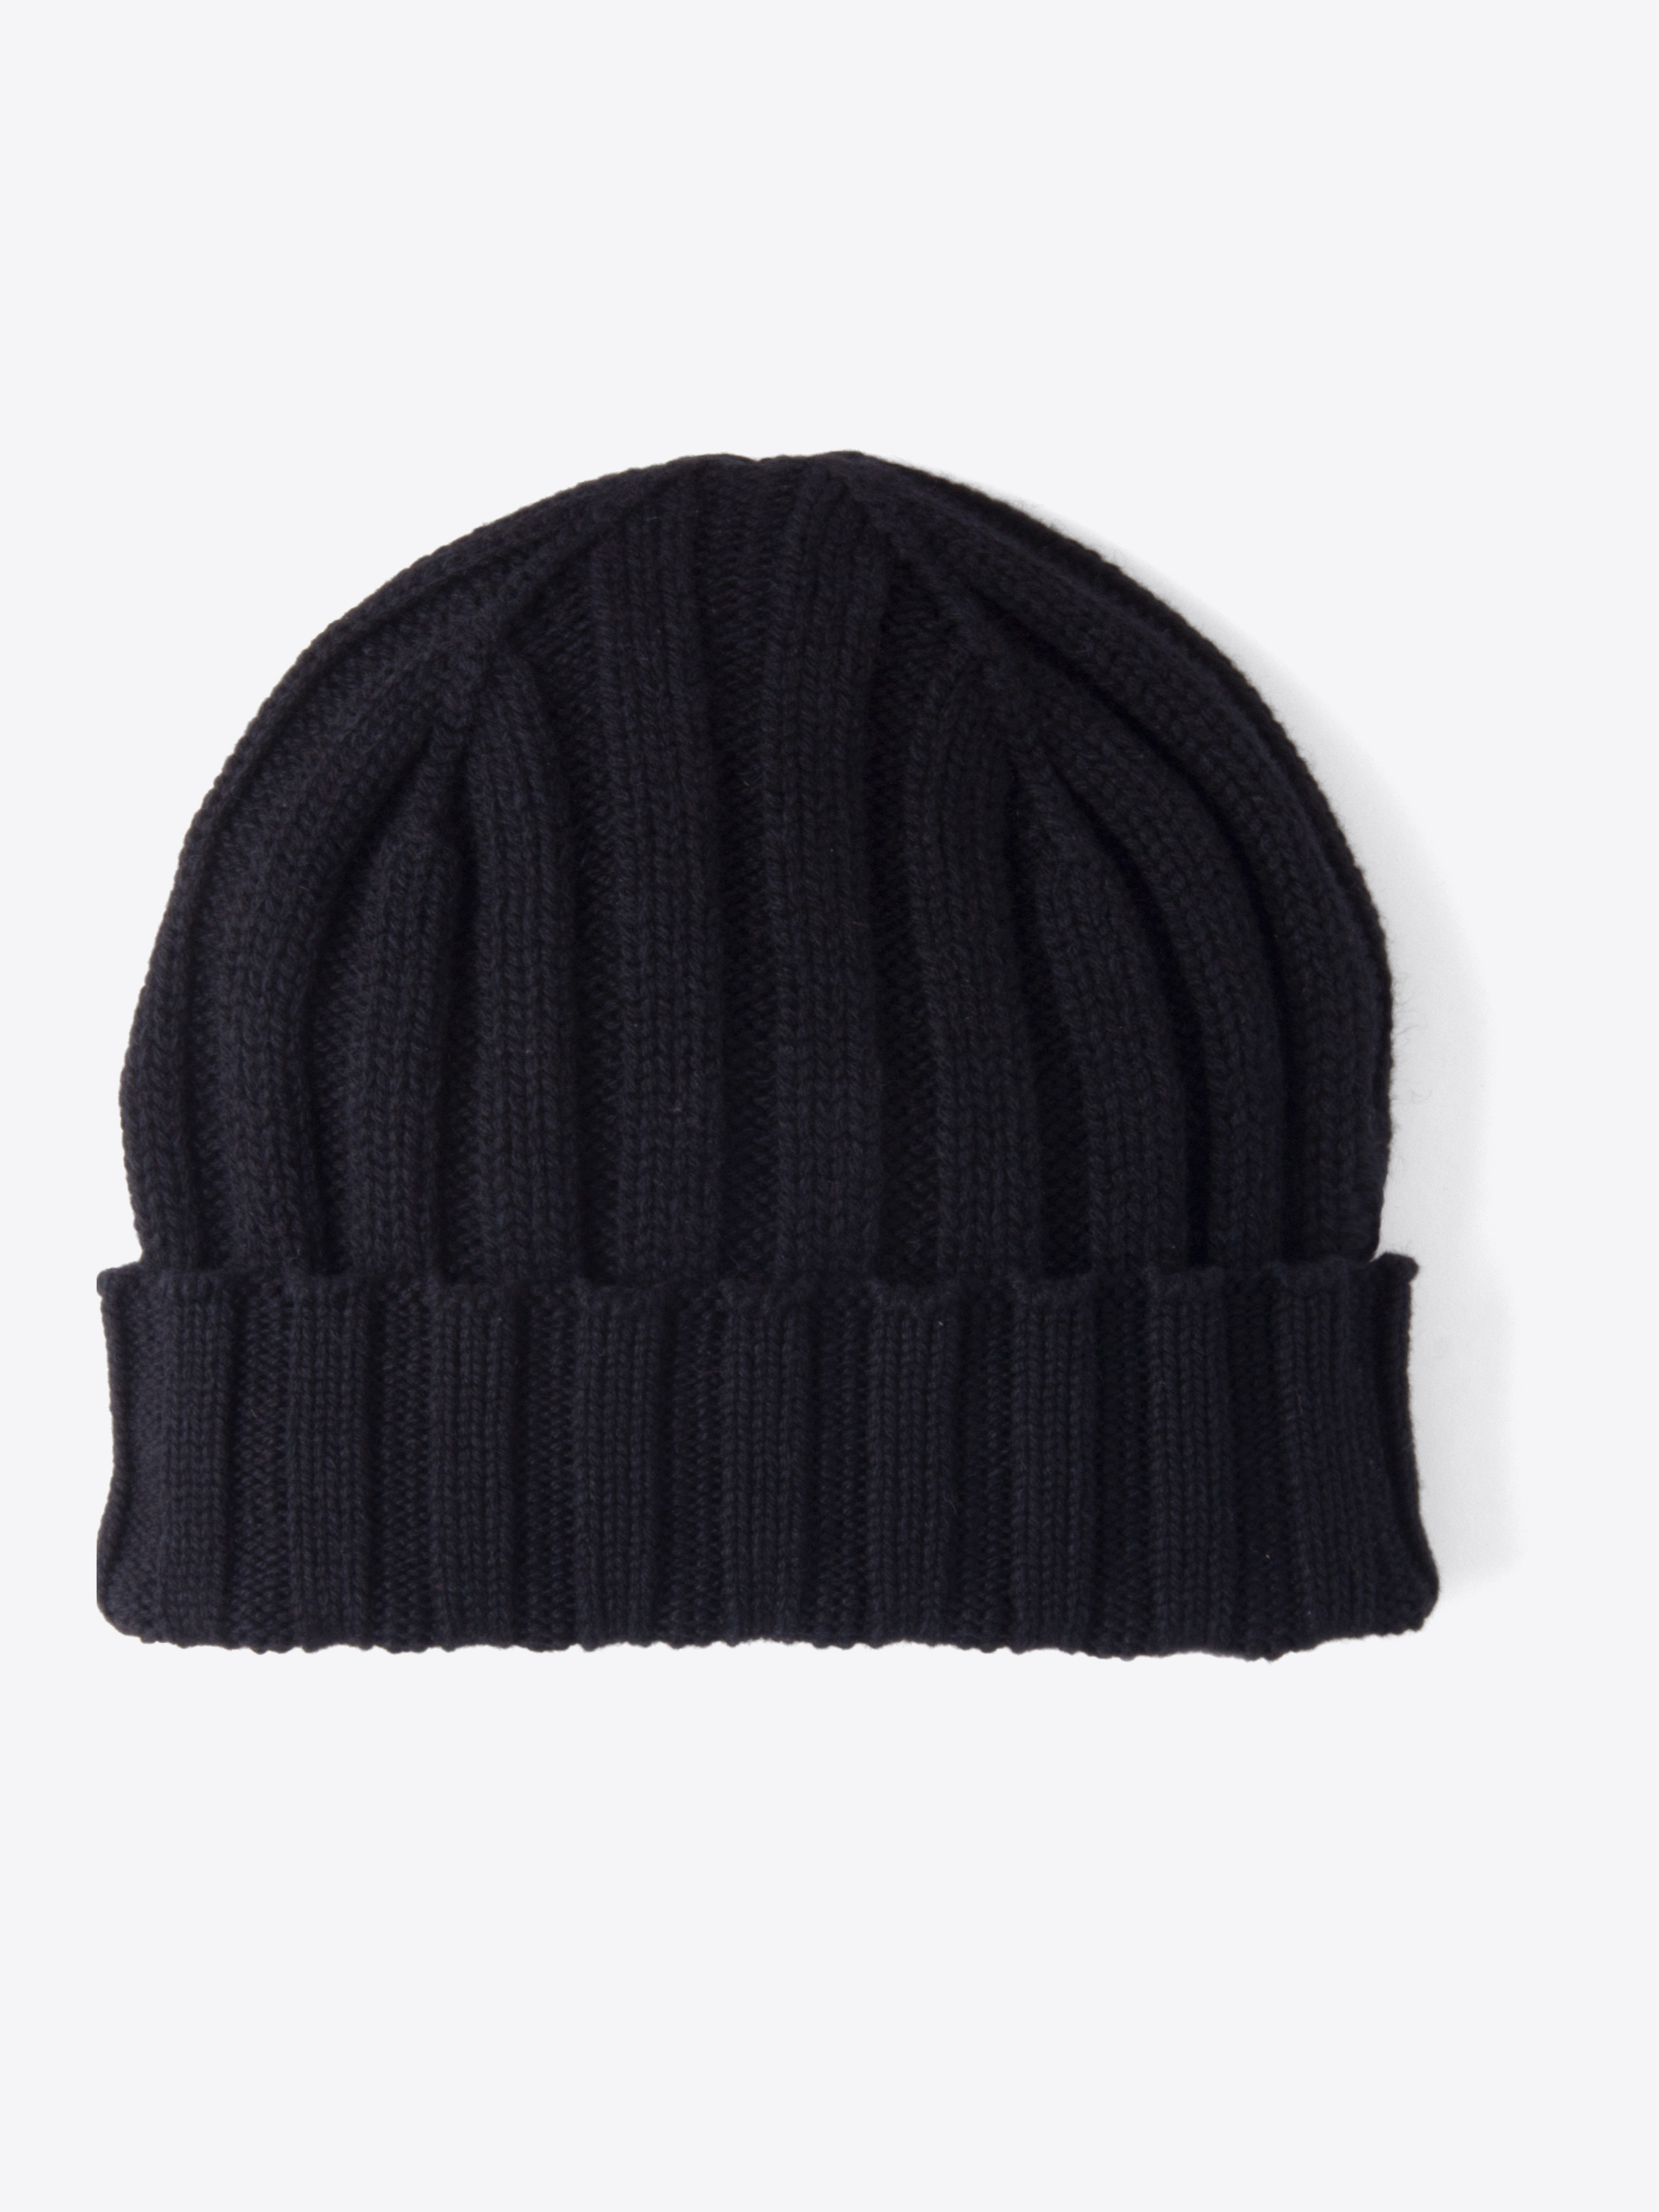 Zoom Image of Black Cashmere Knit Hat